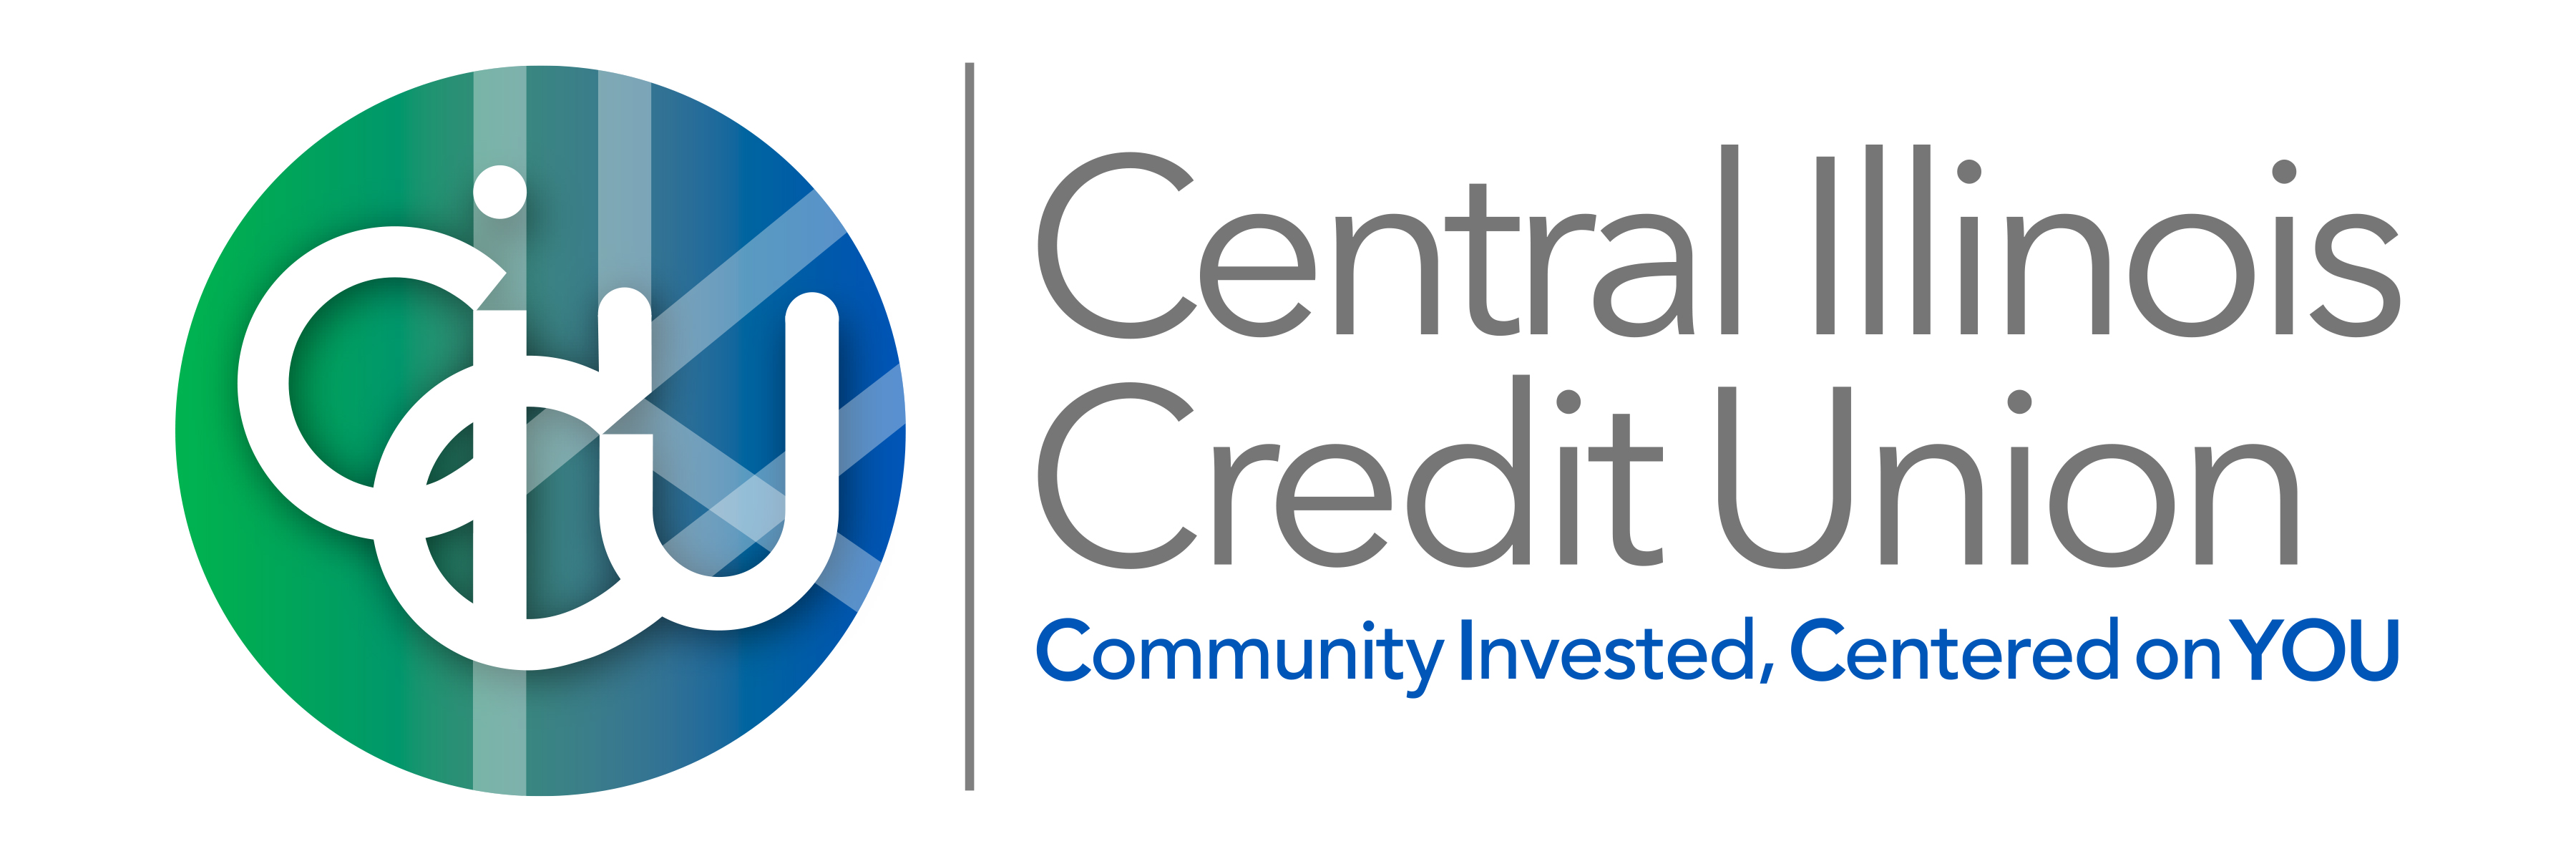 Central Illinois Credit Union